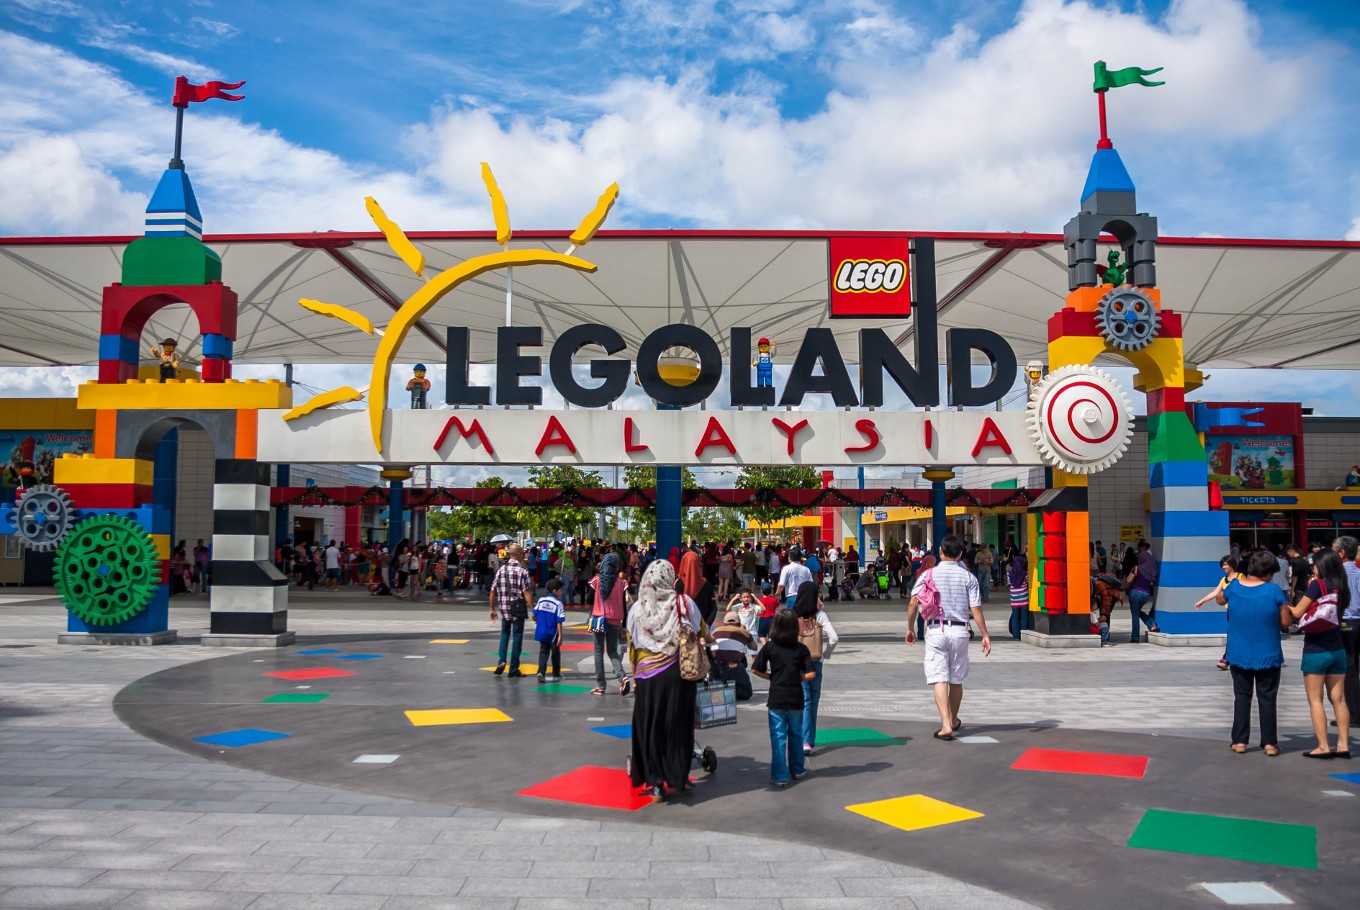 1581258489 866 السياحة في ماليزيا للاطفال ..أفضل أماكن الترفيه والمغامرات - Tourism in Malaysia for children ... the best places for entertainment and adventure